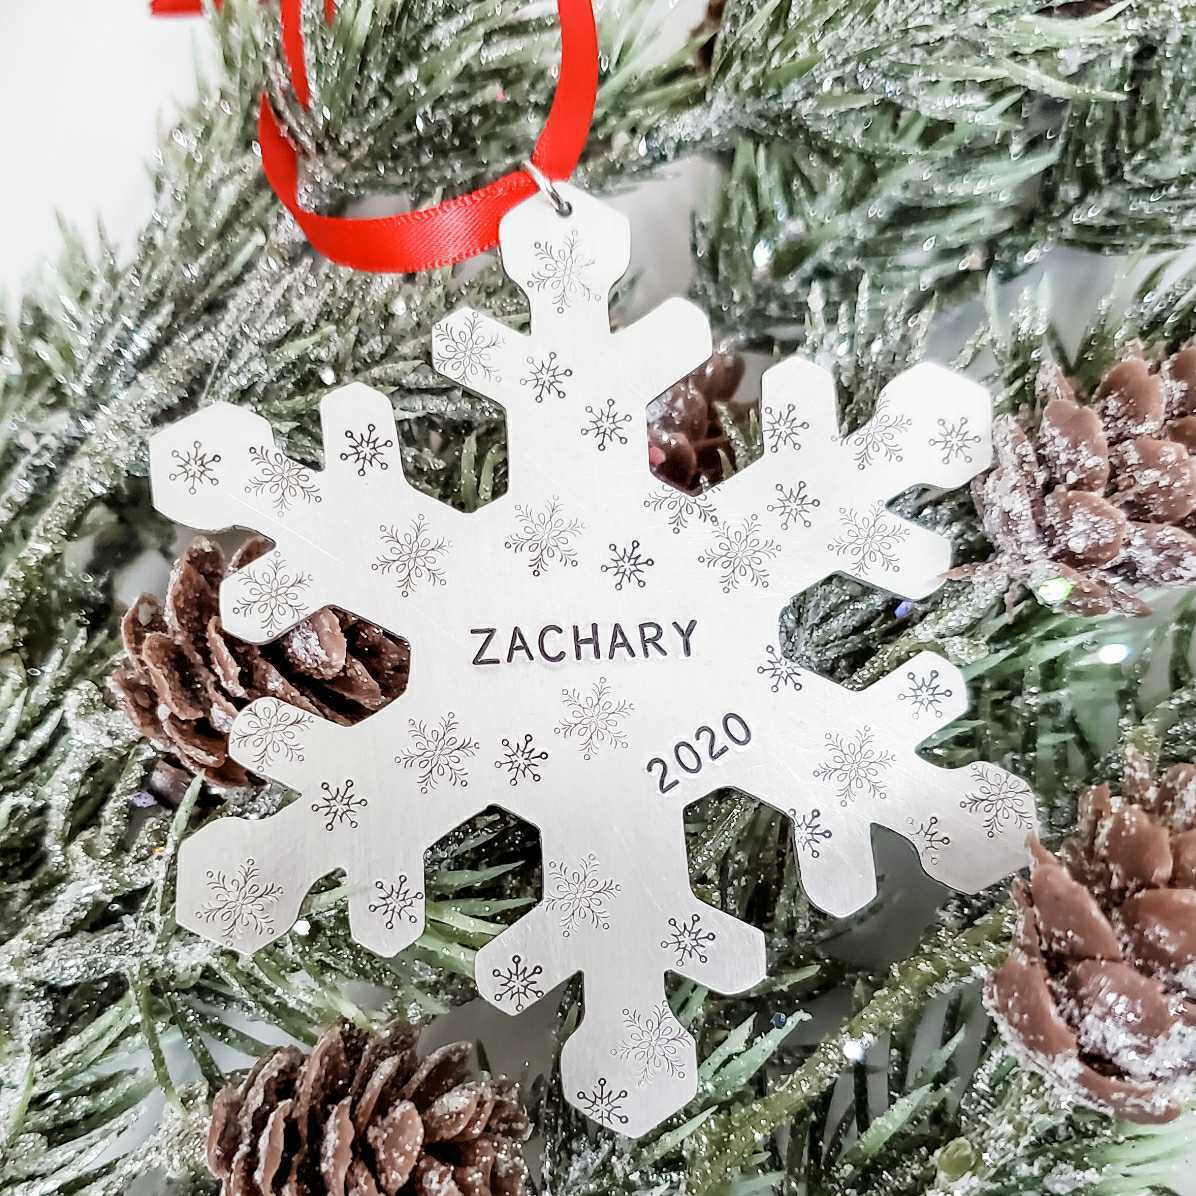 Child's Name Snowflake Christmas Ornament Salt and Sparkle